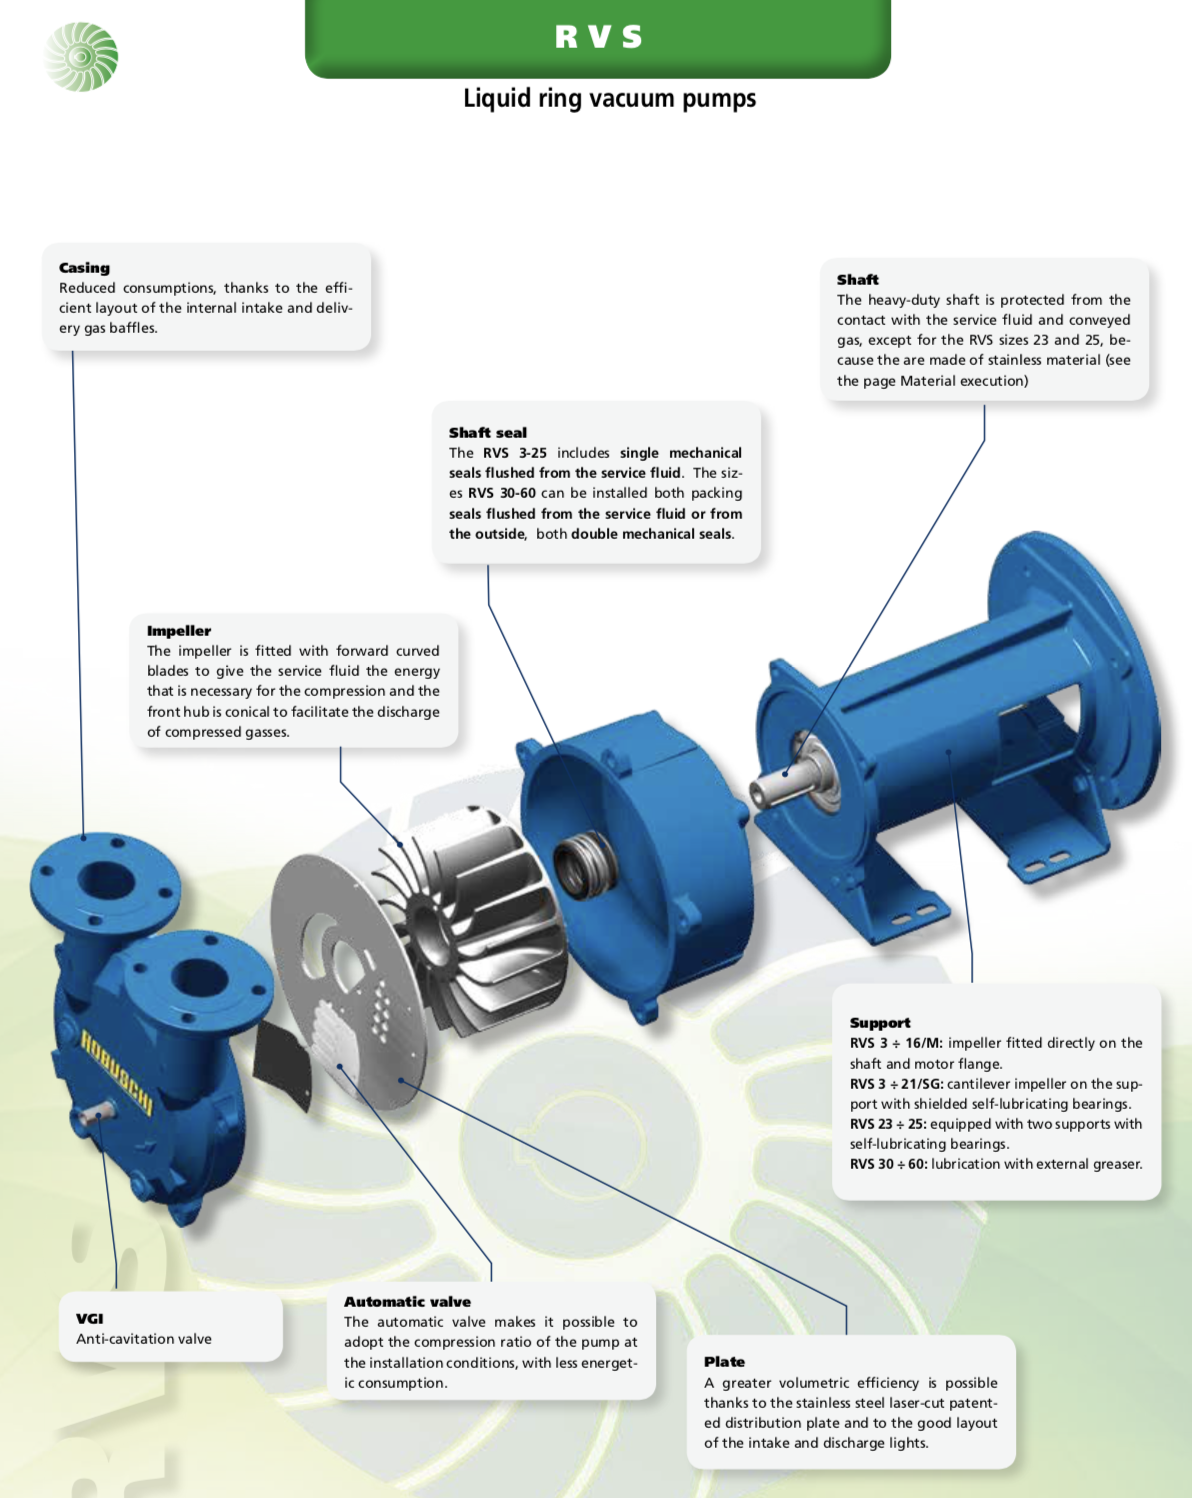 Somarakis® Replacement Liquid Ring Pumps and Compressors - NES Company